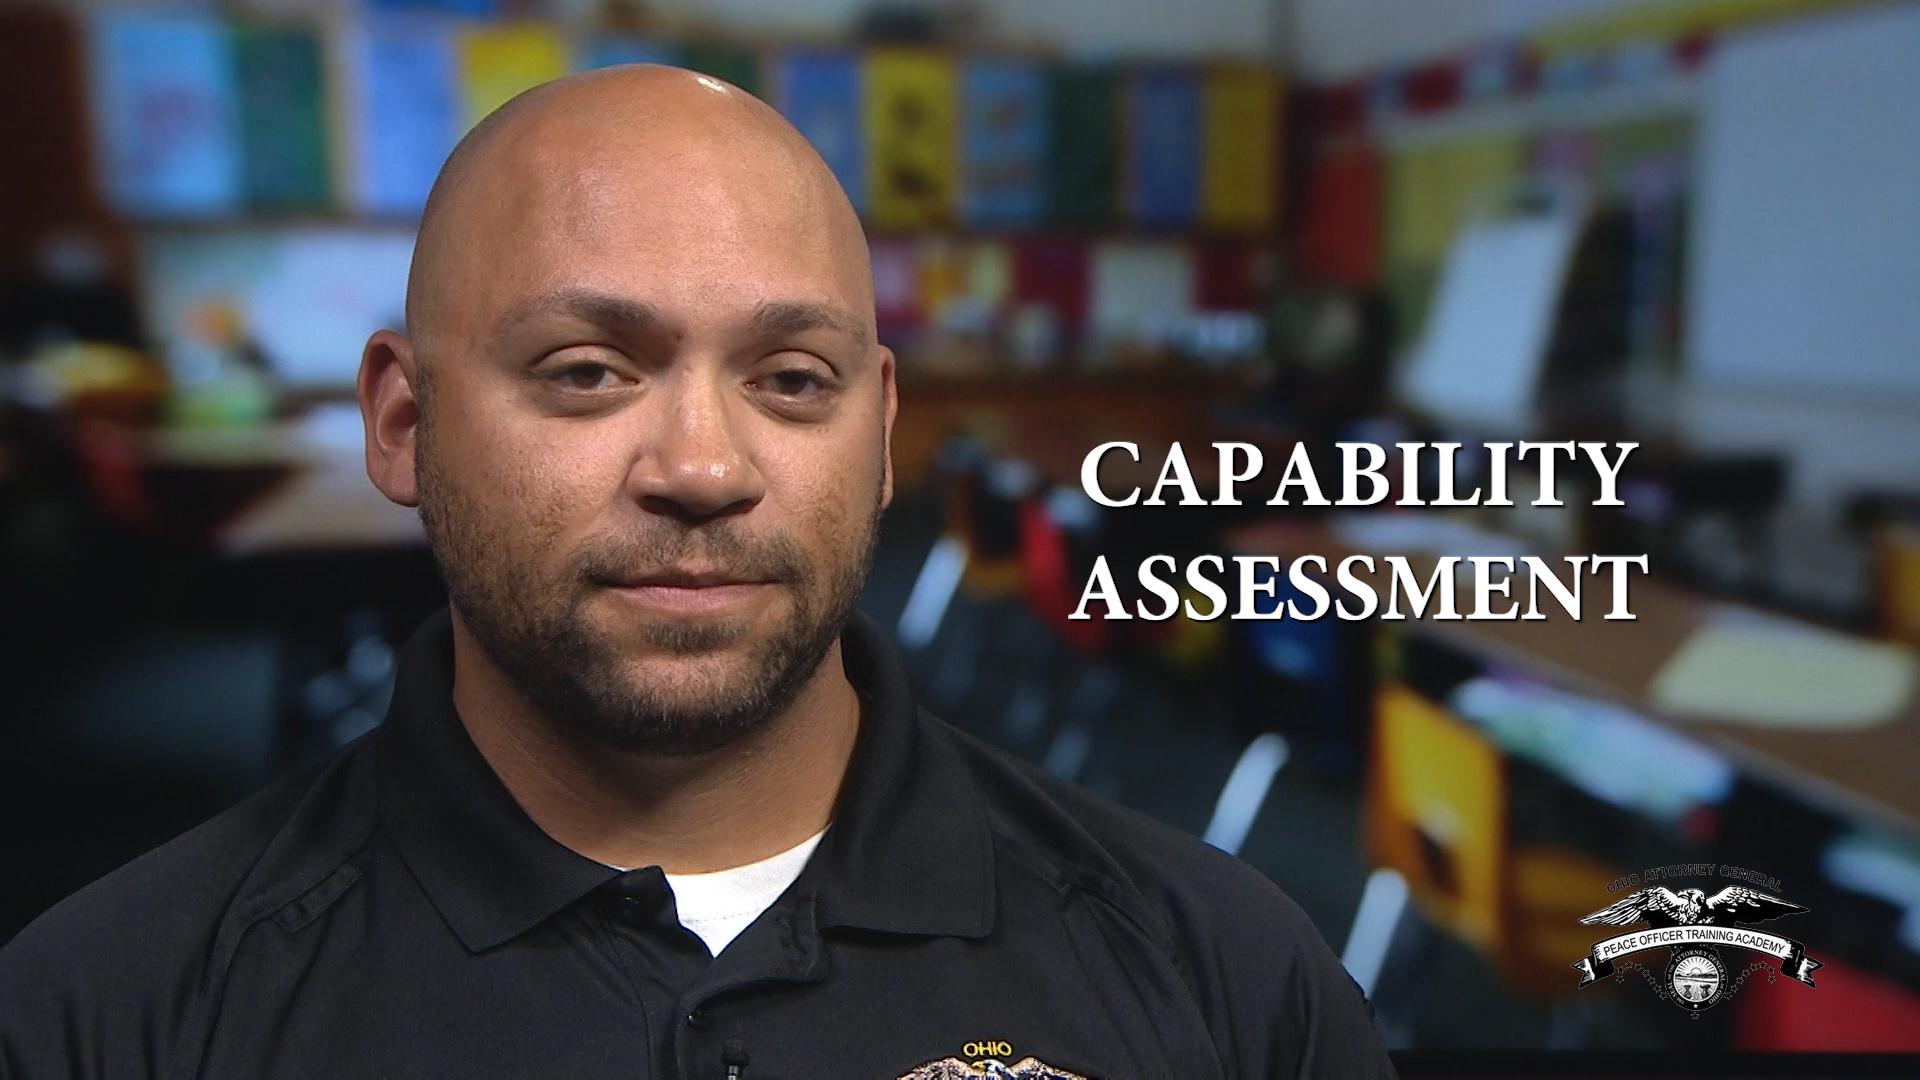 Video 24: Capability Assessment